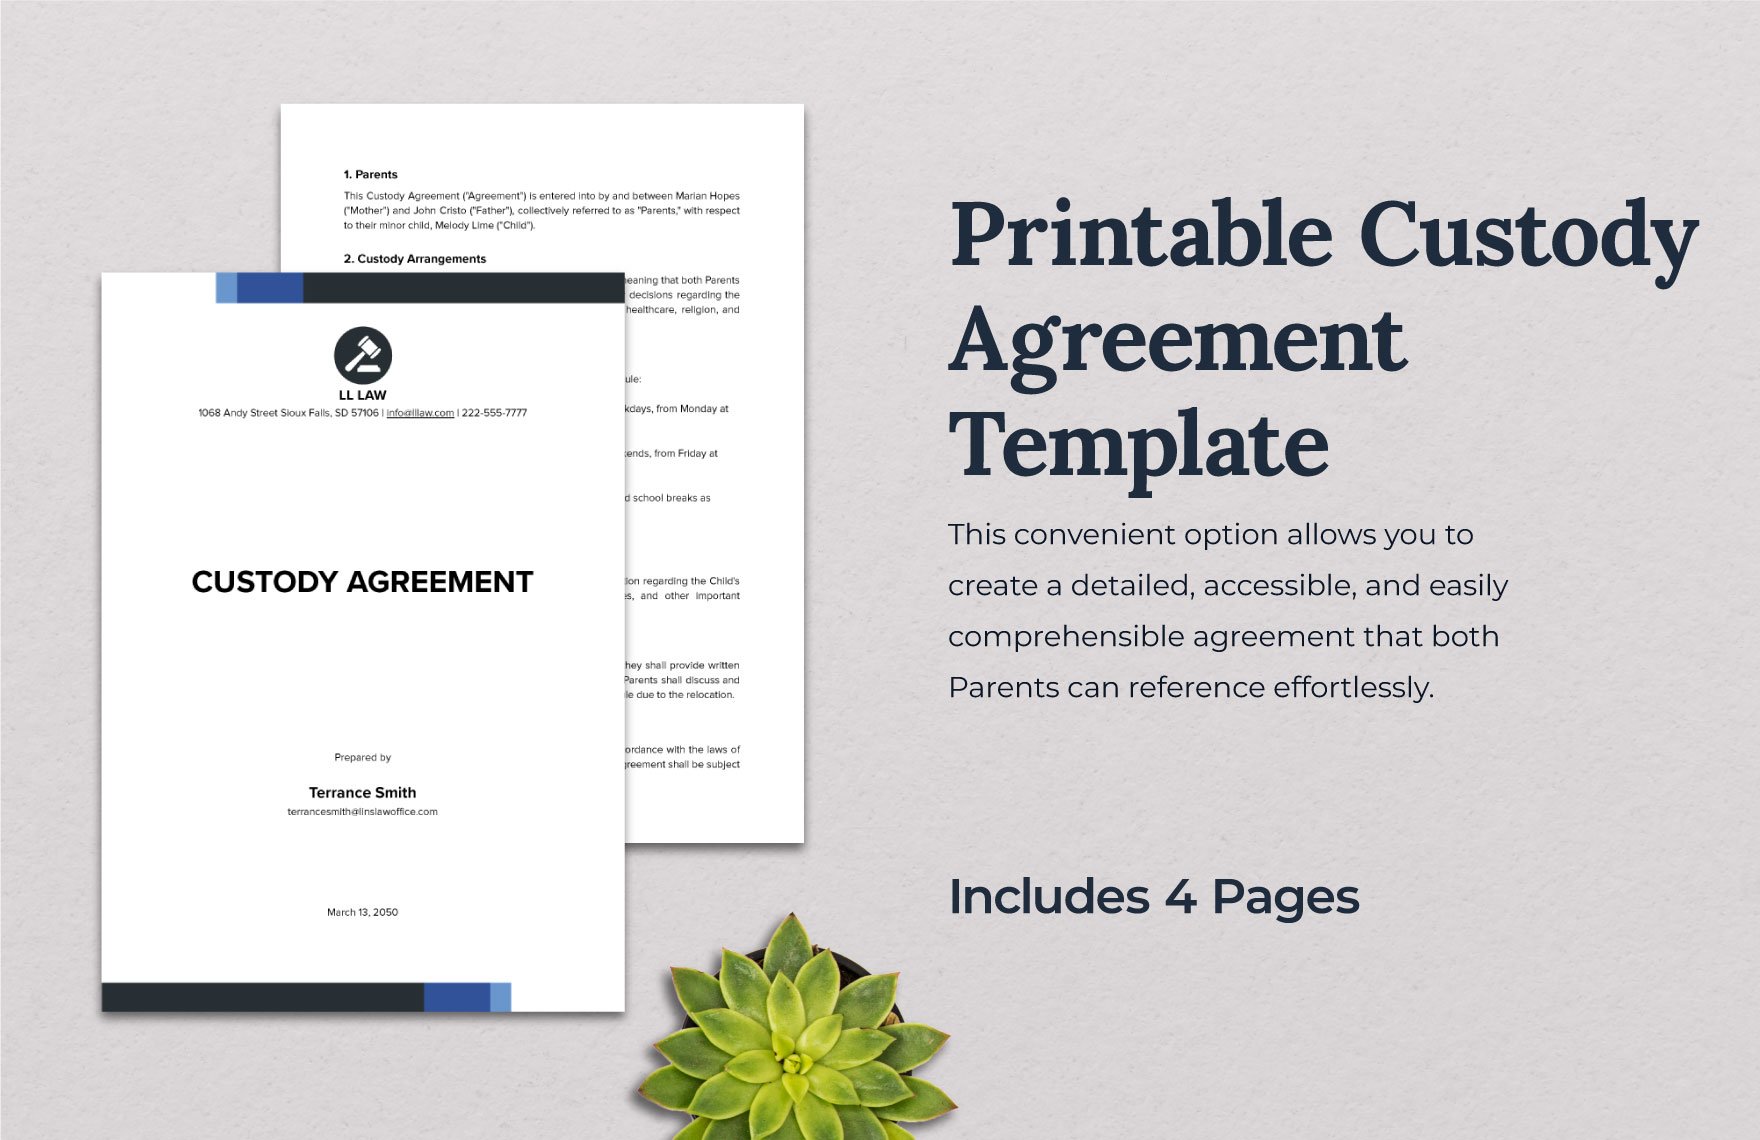 Printable Custody Agreement Template